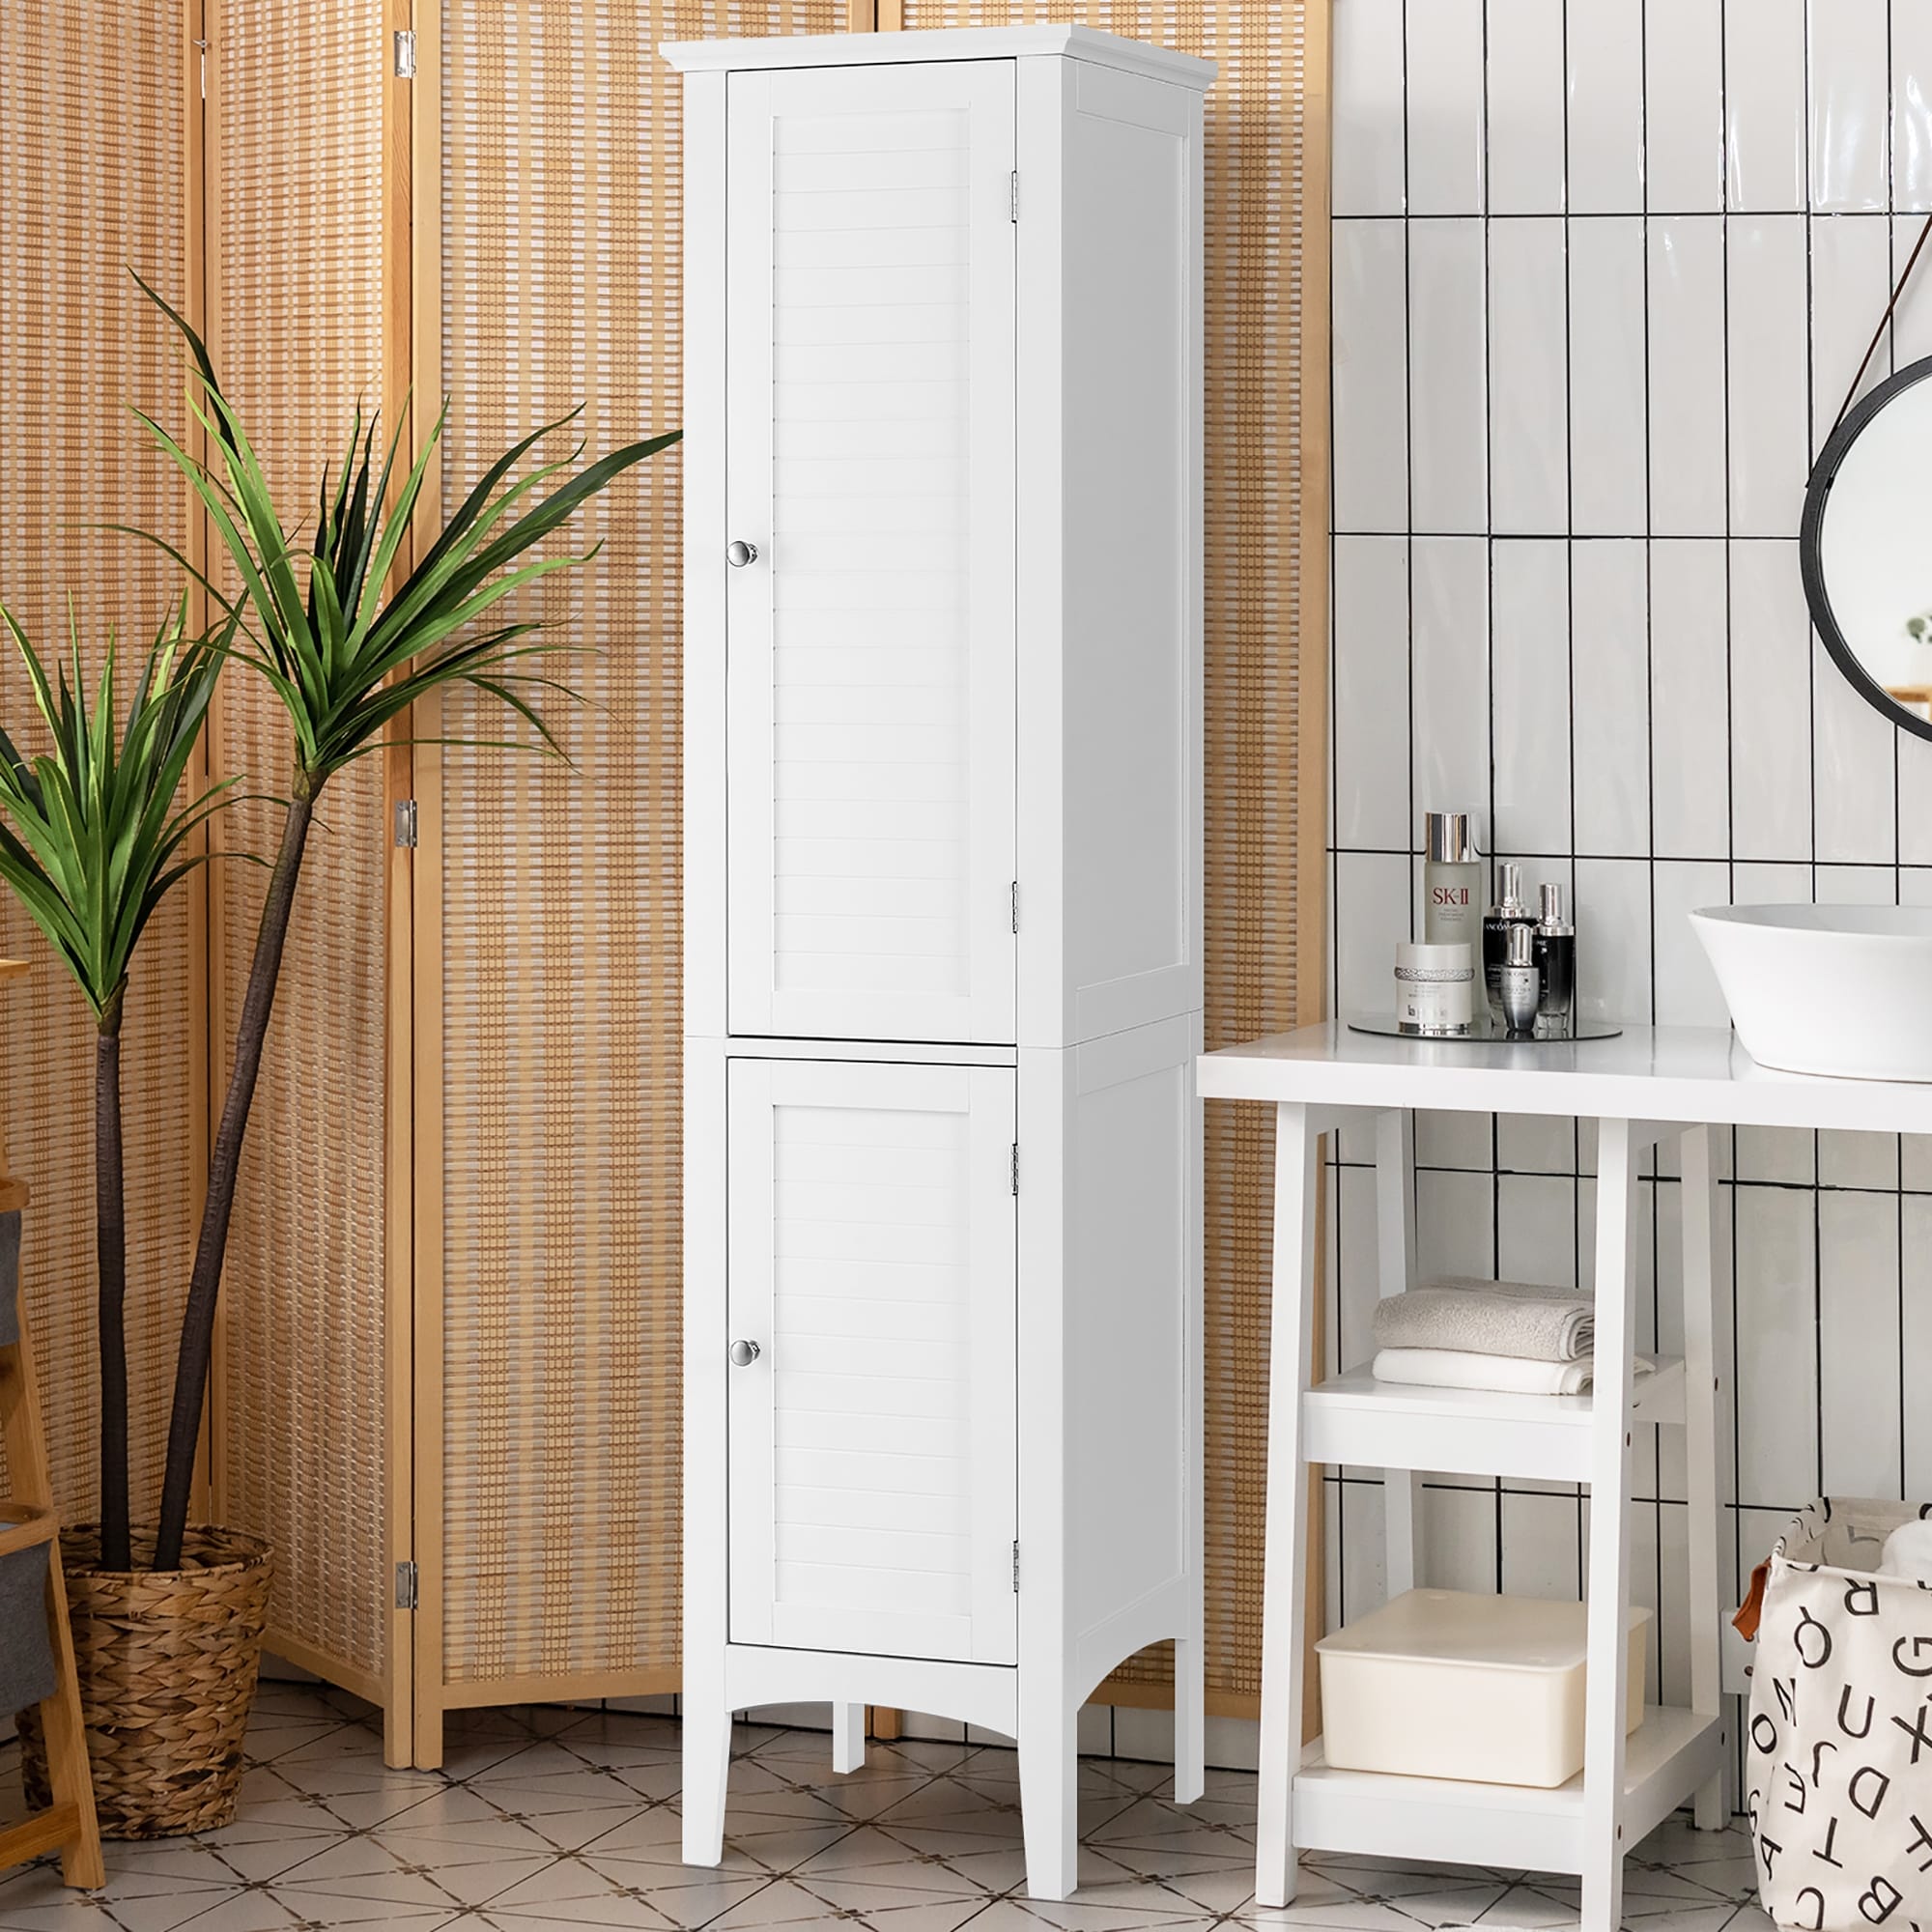 5 Tier Wooden Freestanding Tower Cabinet Tall Bathroom Storage